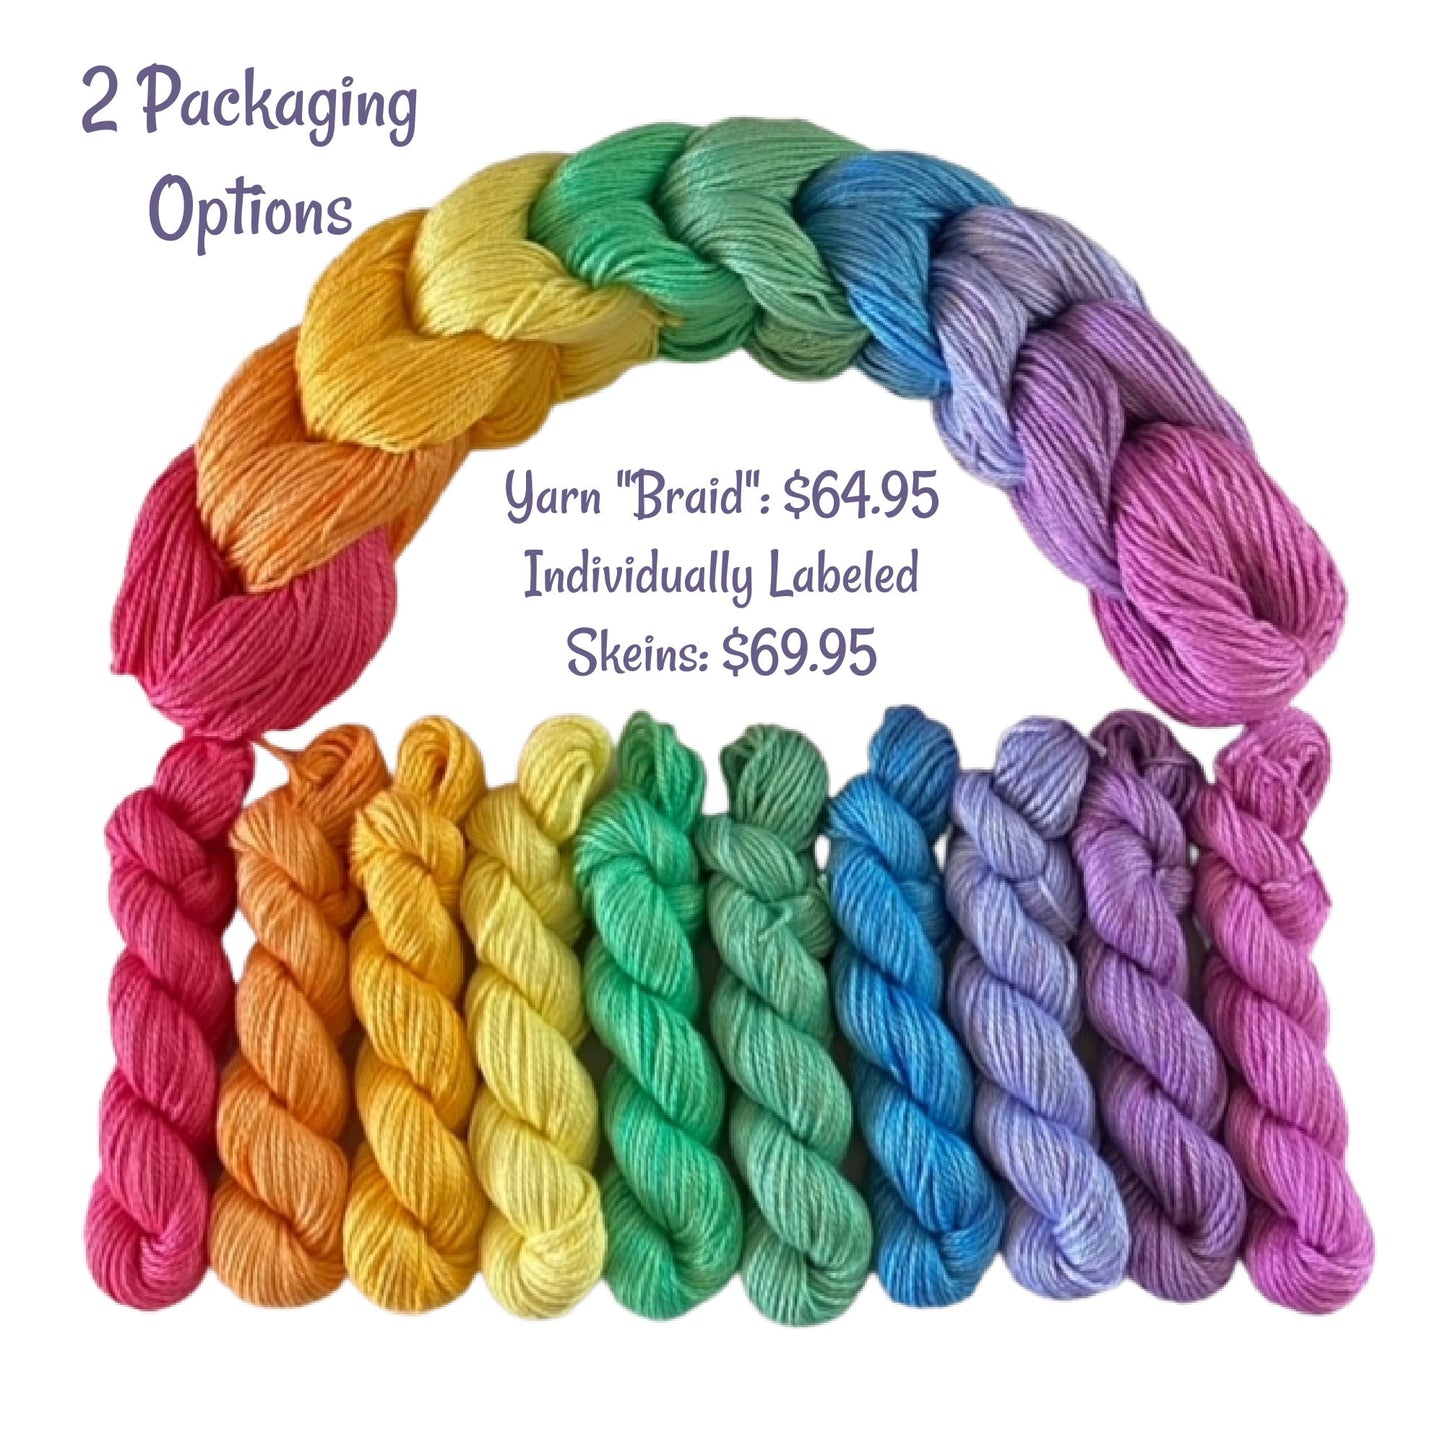 Rainbow Hand Dyed Vegan Yarn Kit - Pastels - "Mo's Rainbow" - 10 Color DK / Light Worsted Bamboo Cotton Mini Skein Set - 53 yds per skein